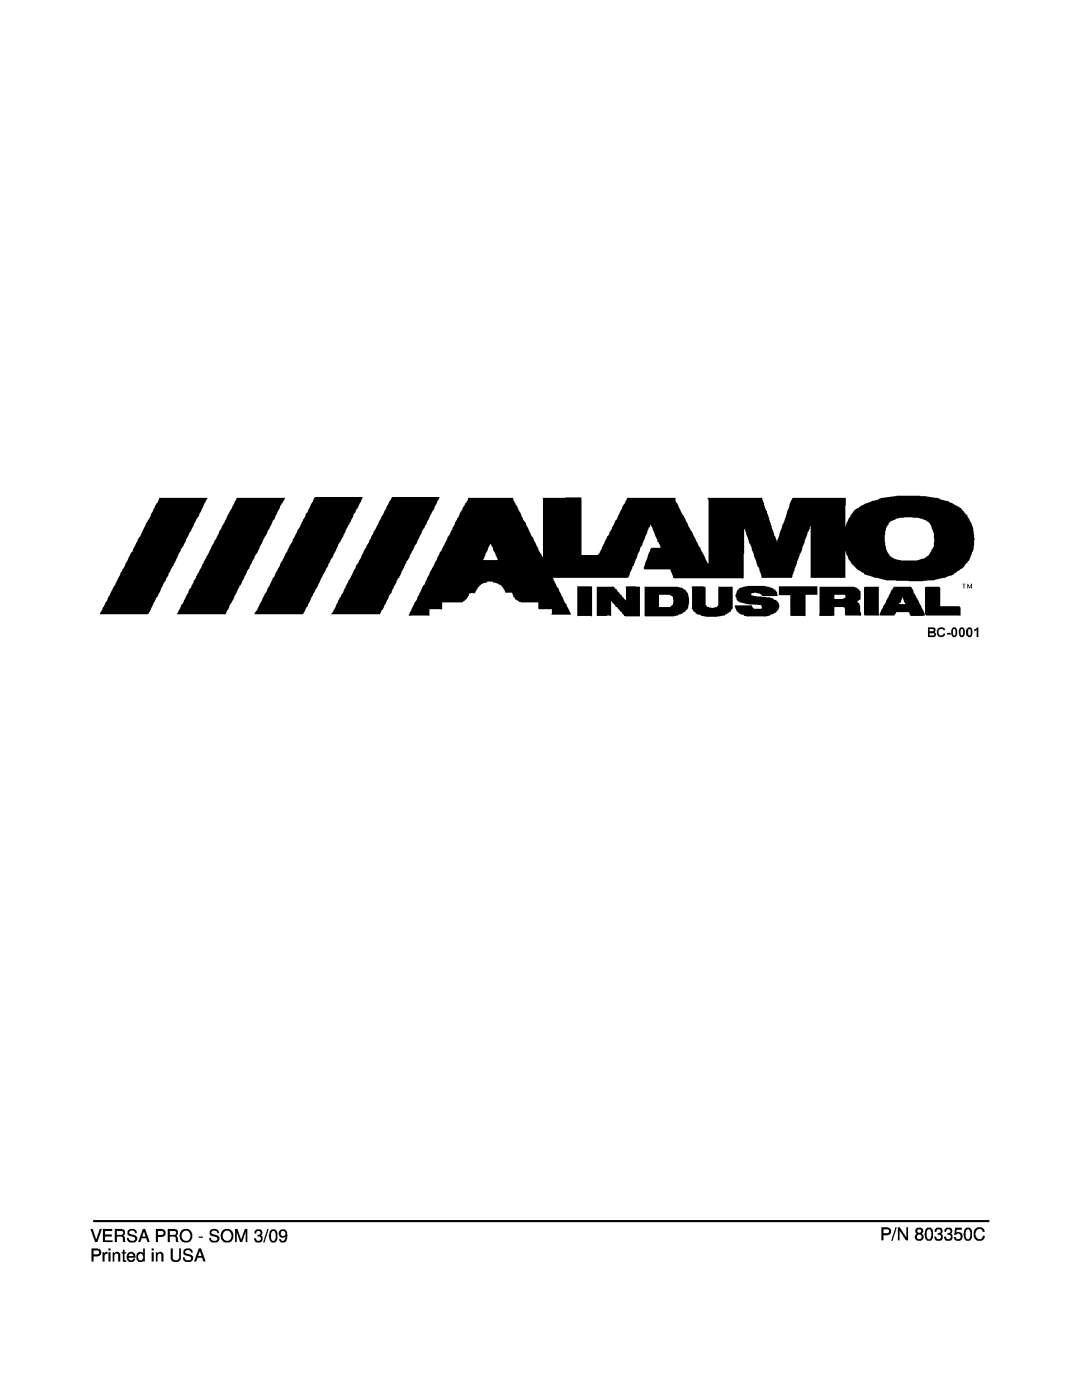 Alamo manual VERSA PRO - SOM 3/09, P/N 803350C, Printed in USA 